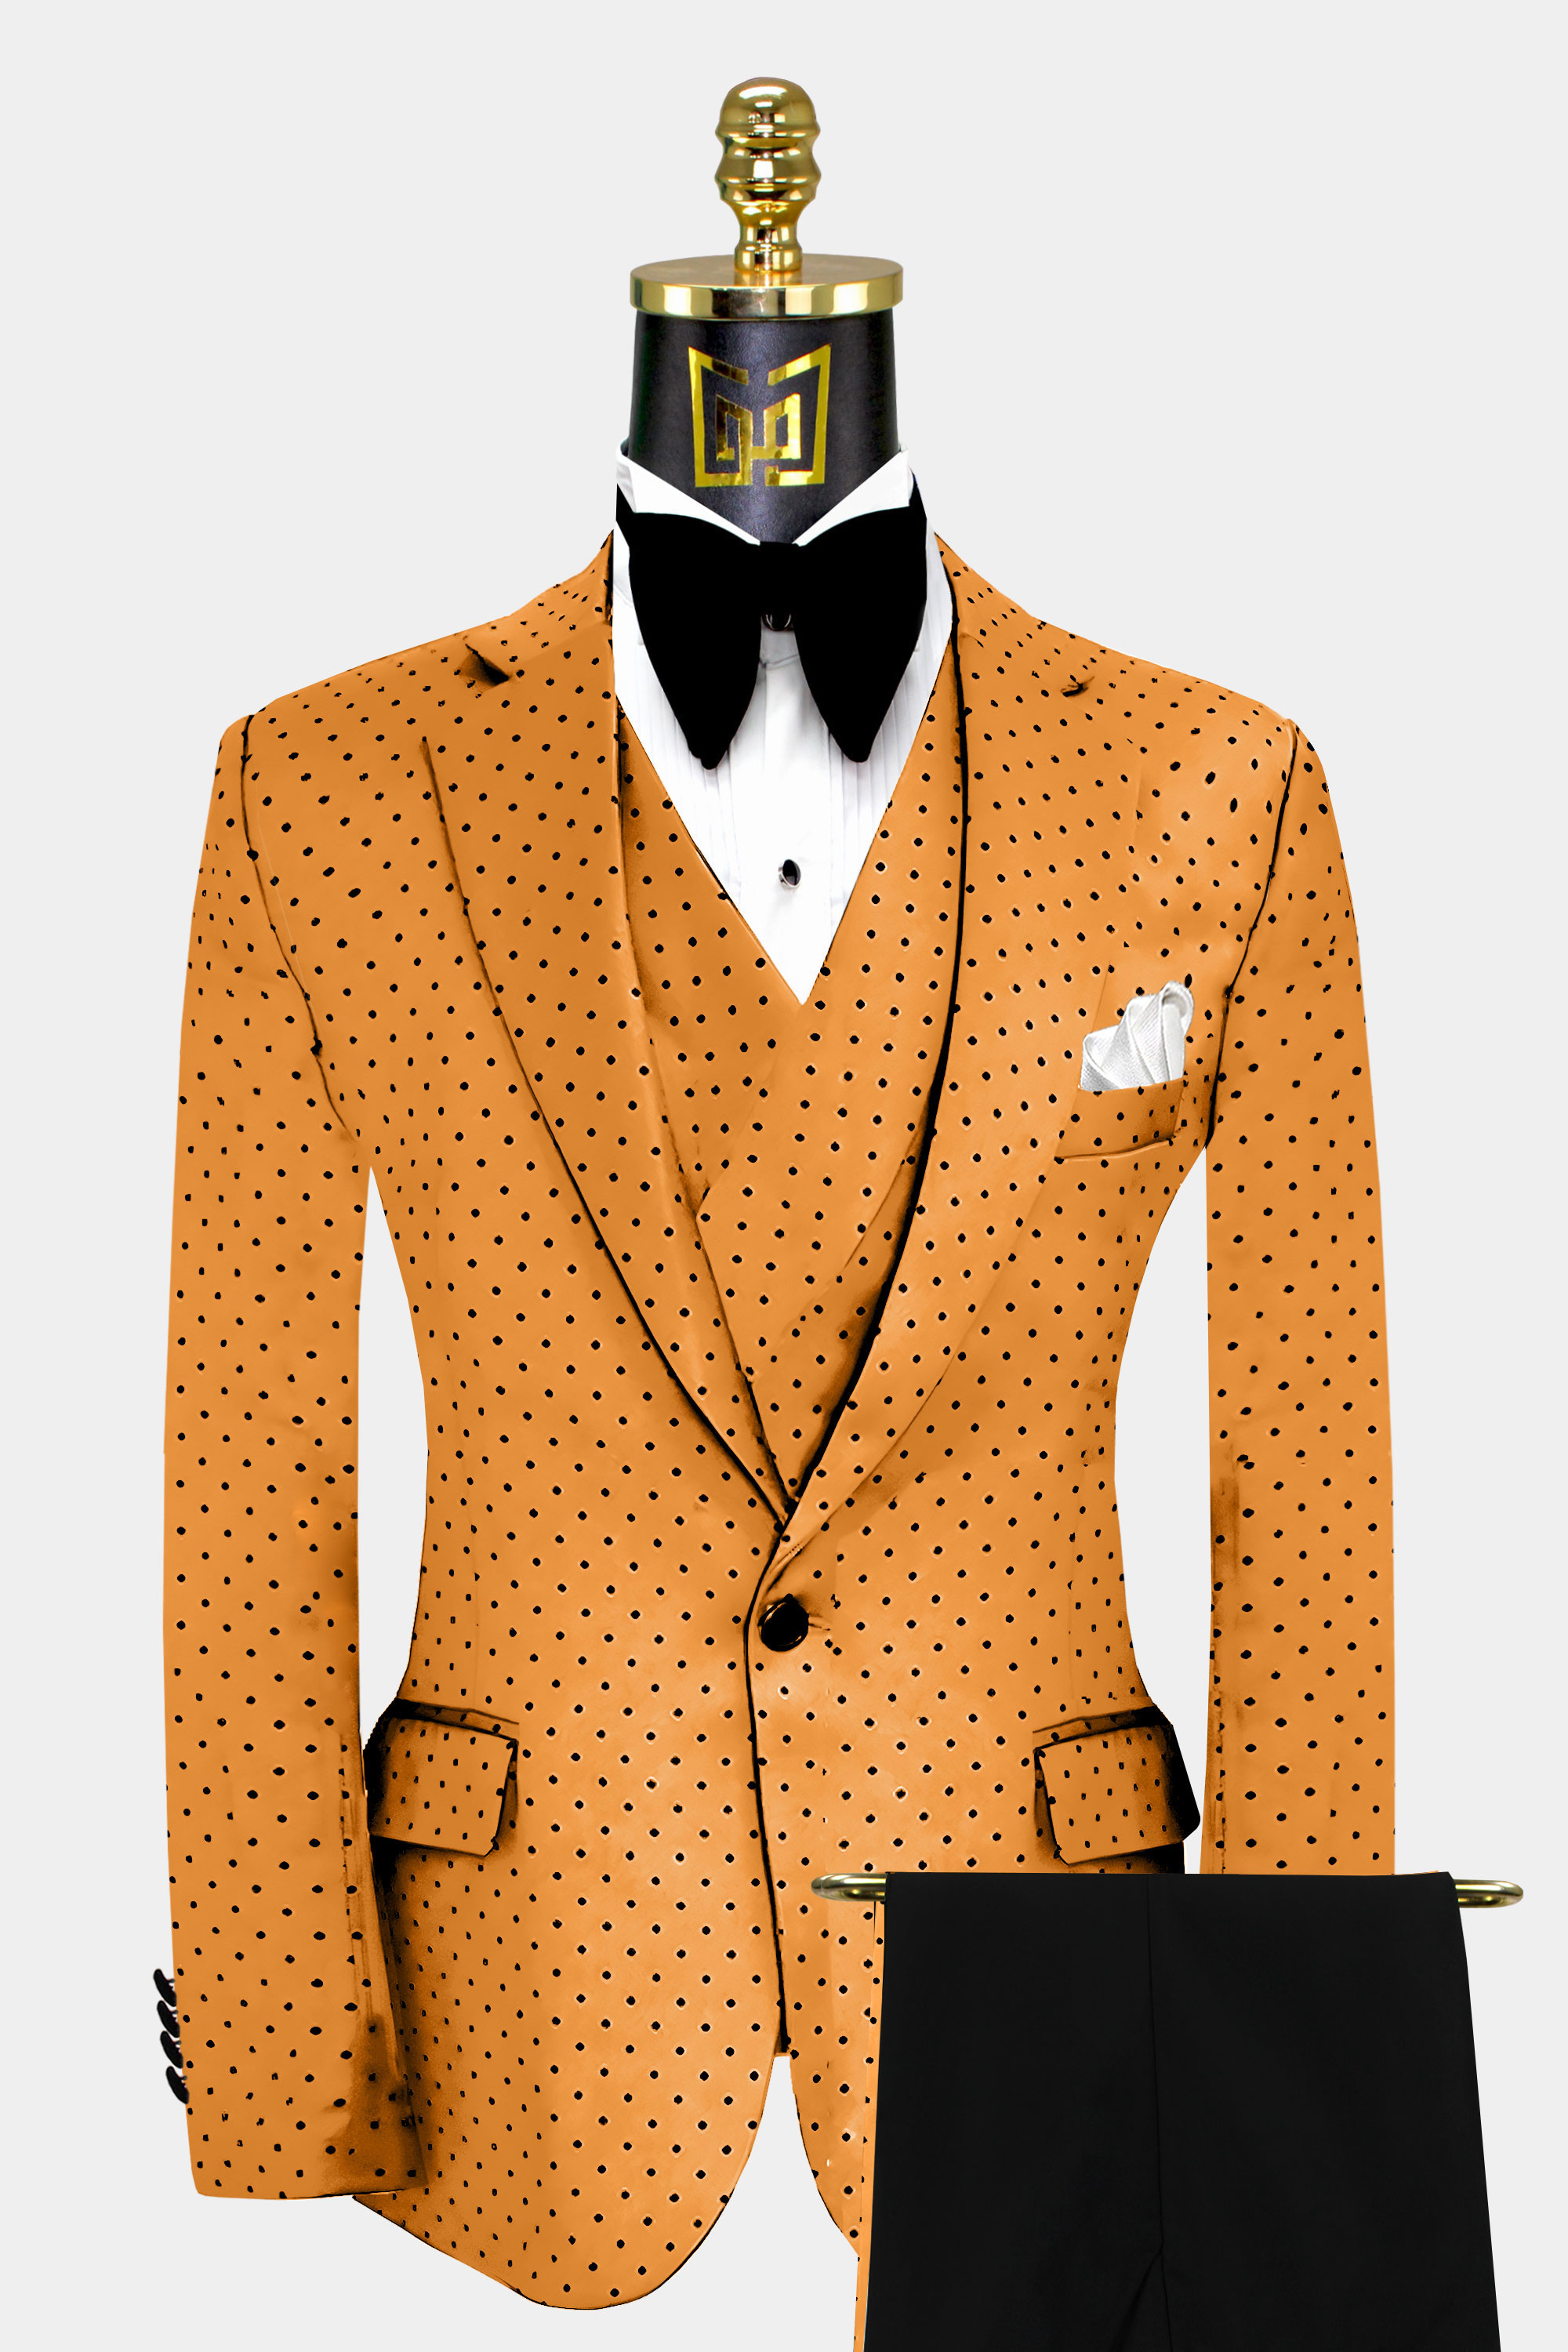 Black-and-Orange-Polka-Dot-Suit-Groom-Suit-from-Gentlemansguru.com